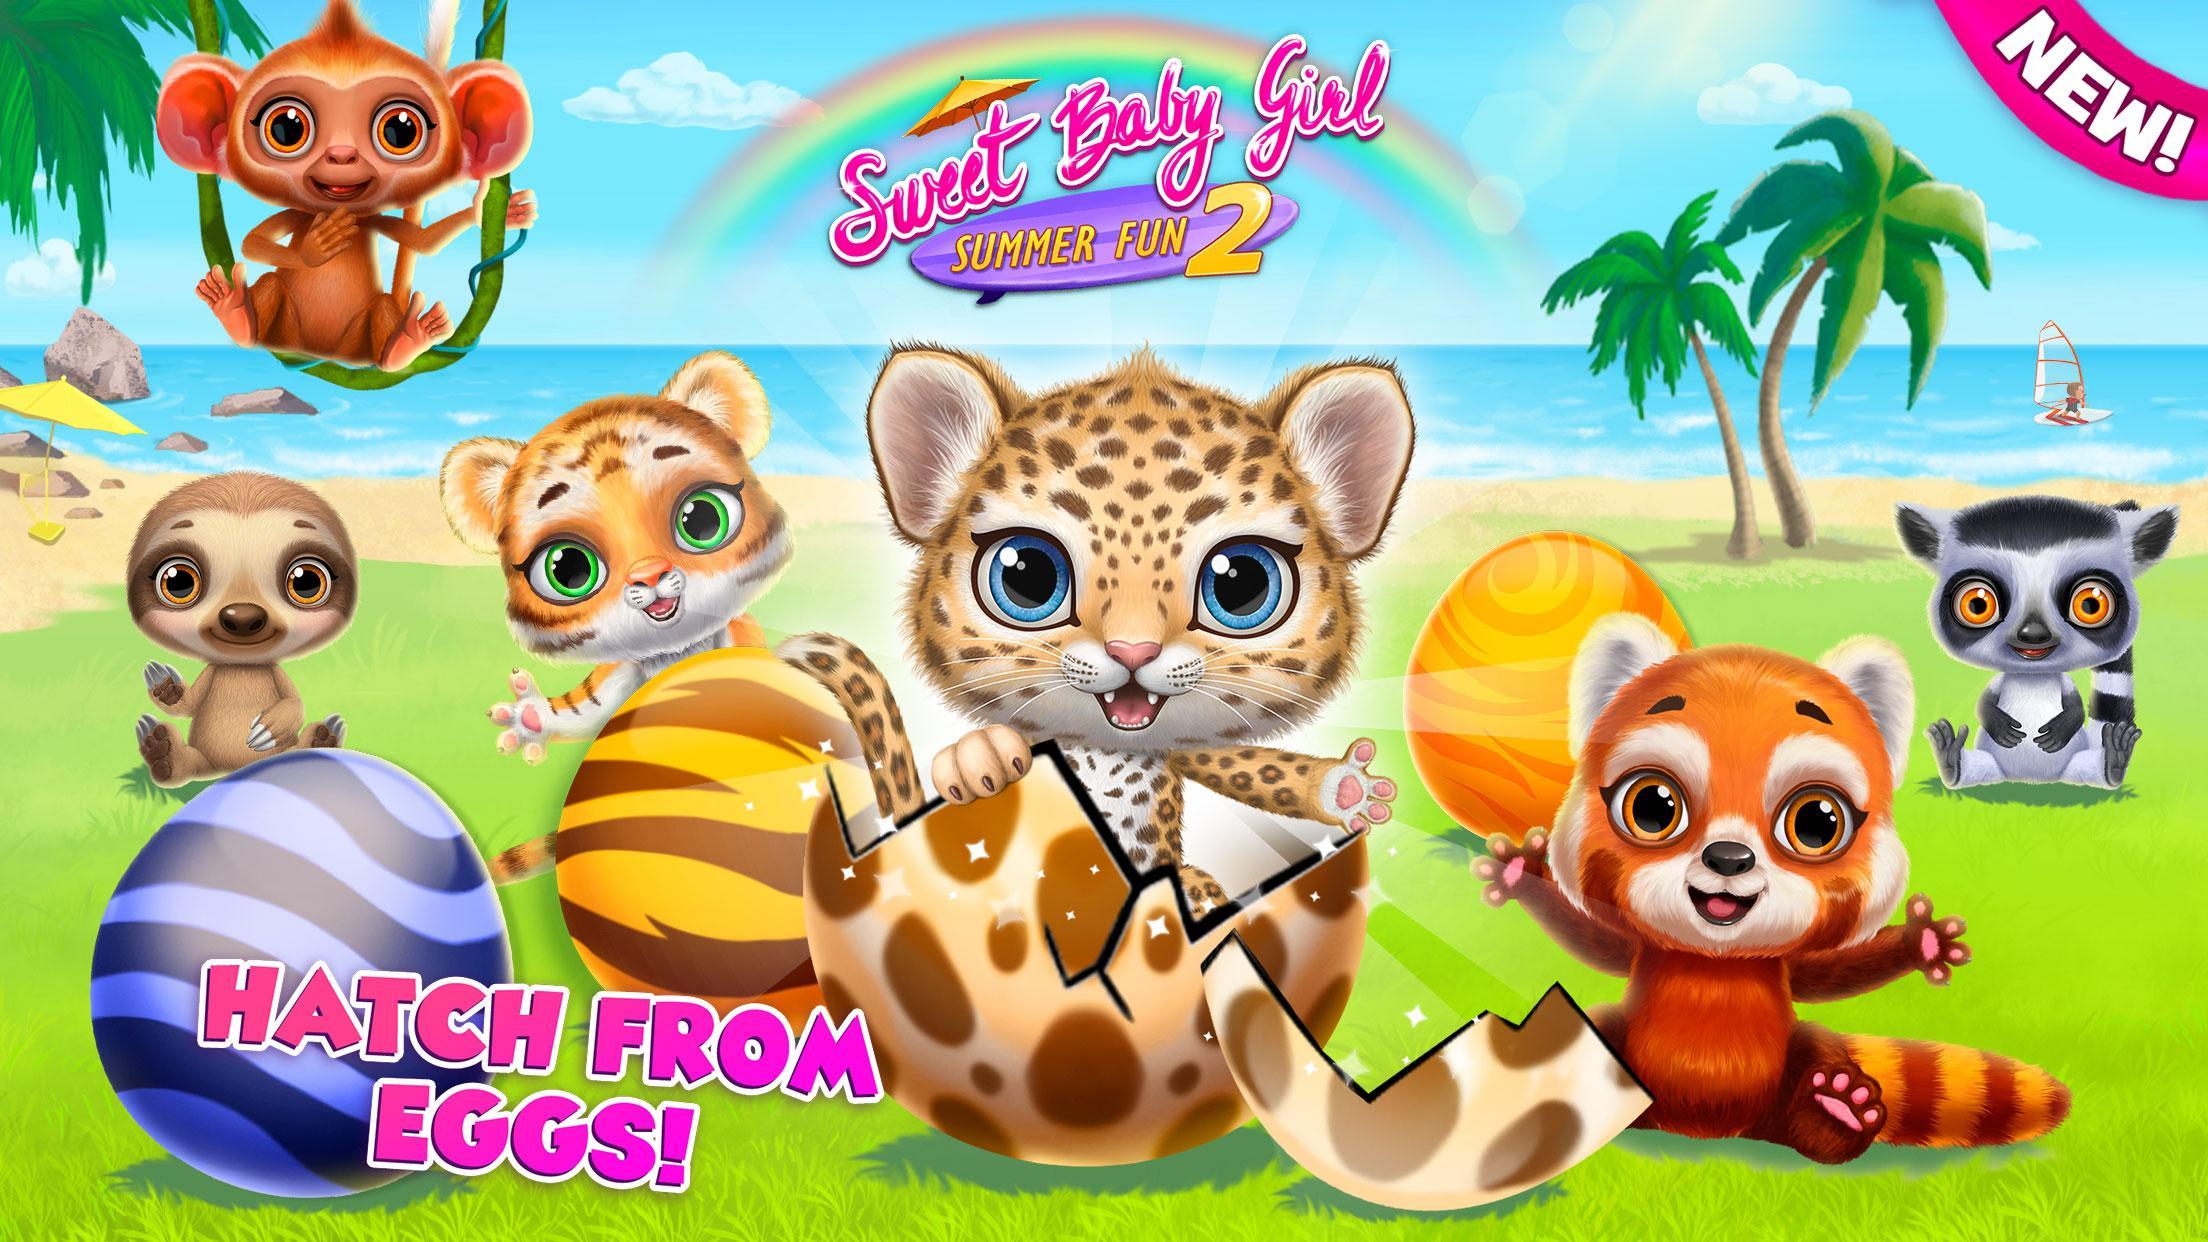 Sweet Baby Girl Summer Fun 2 - Sunny Makeover Game 7.0.1511 Screenshot 1